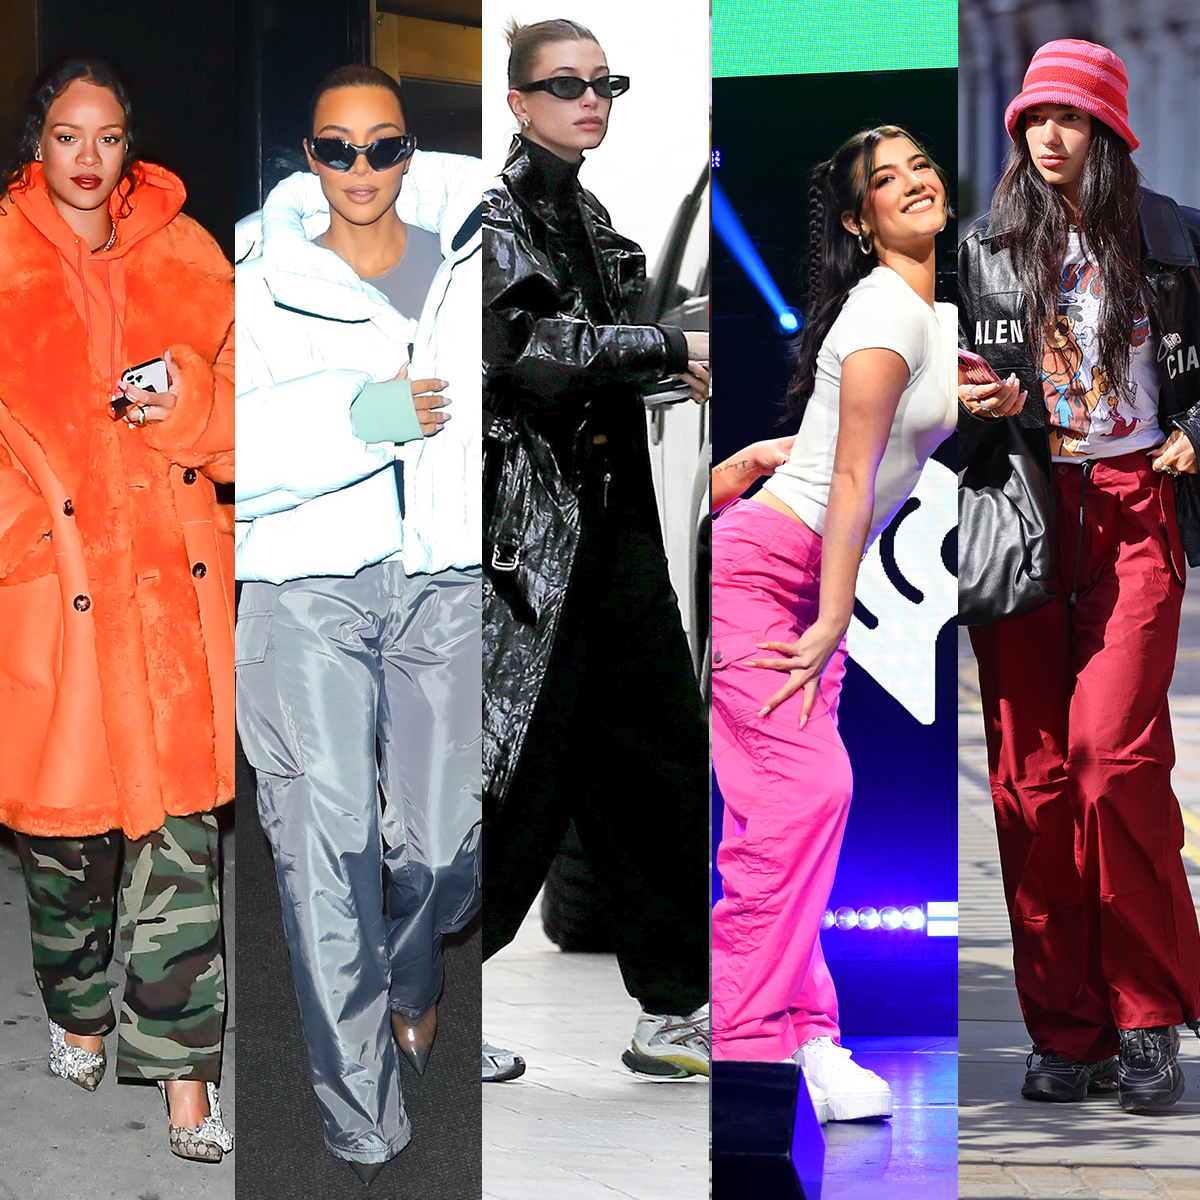 Kim Kardashian Sweatpants Fashion Trend: How to Get the Look